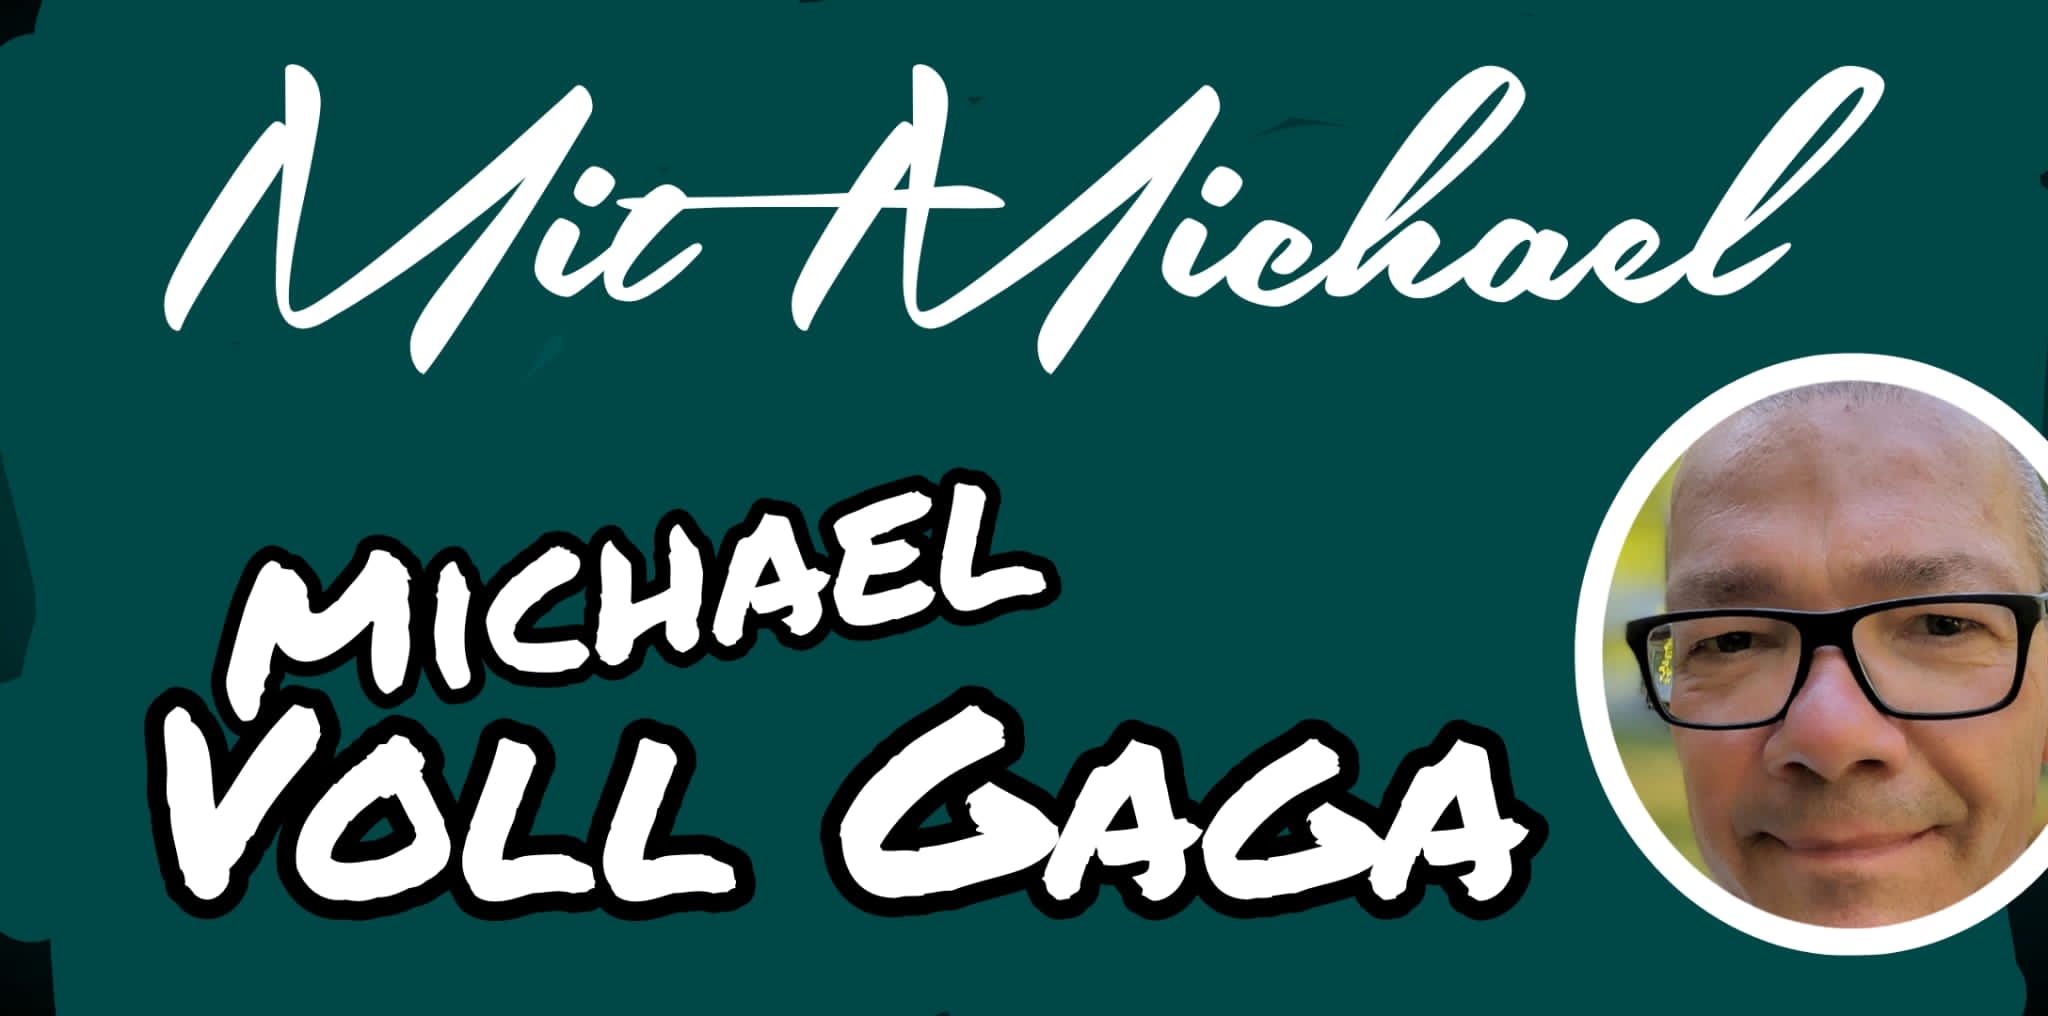 Michael Voll Gaga